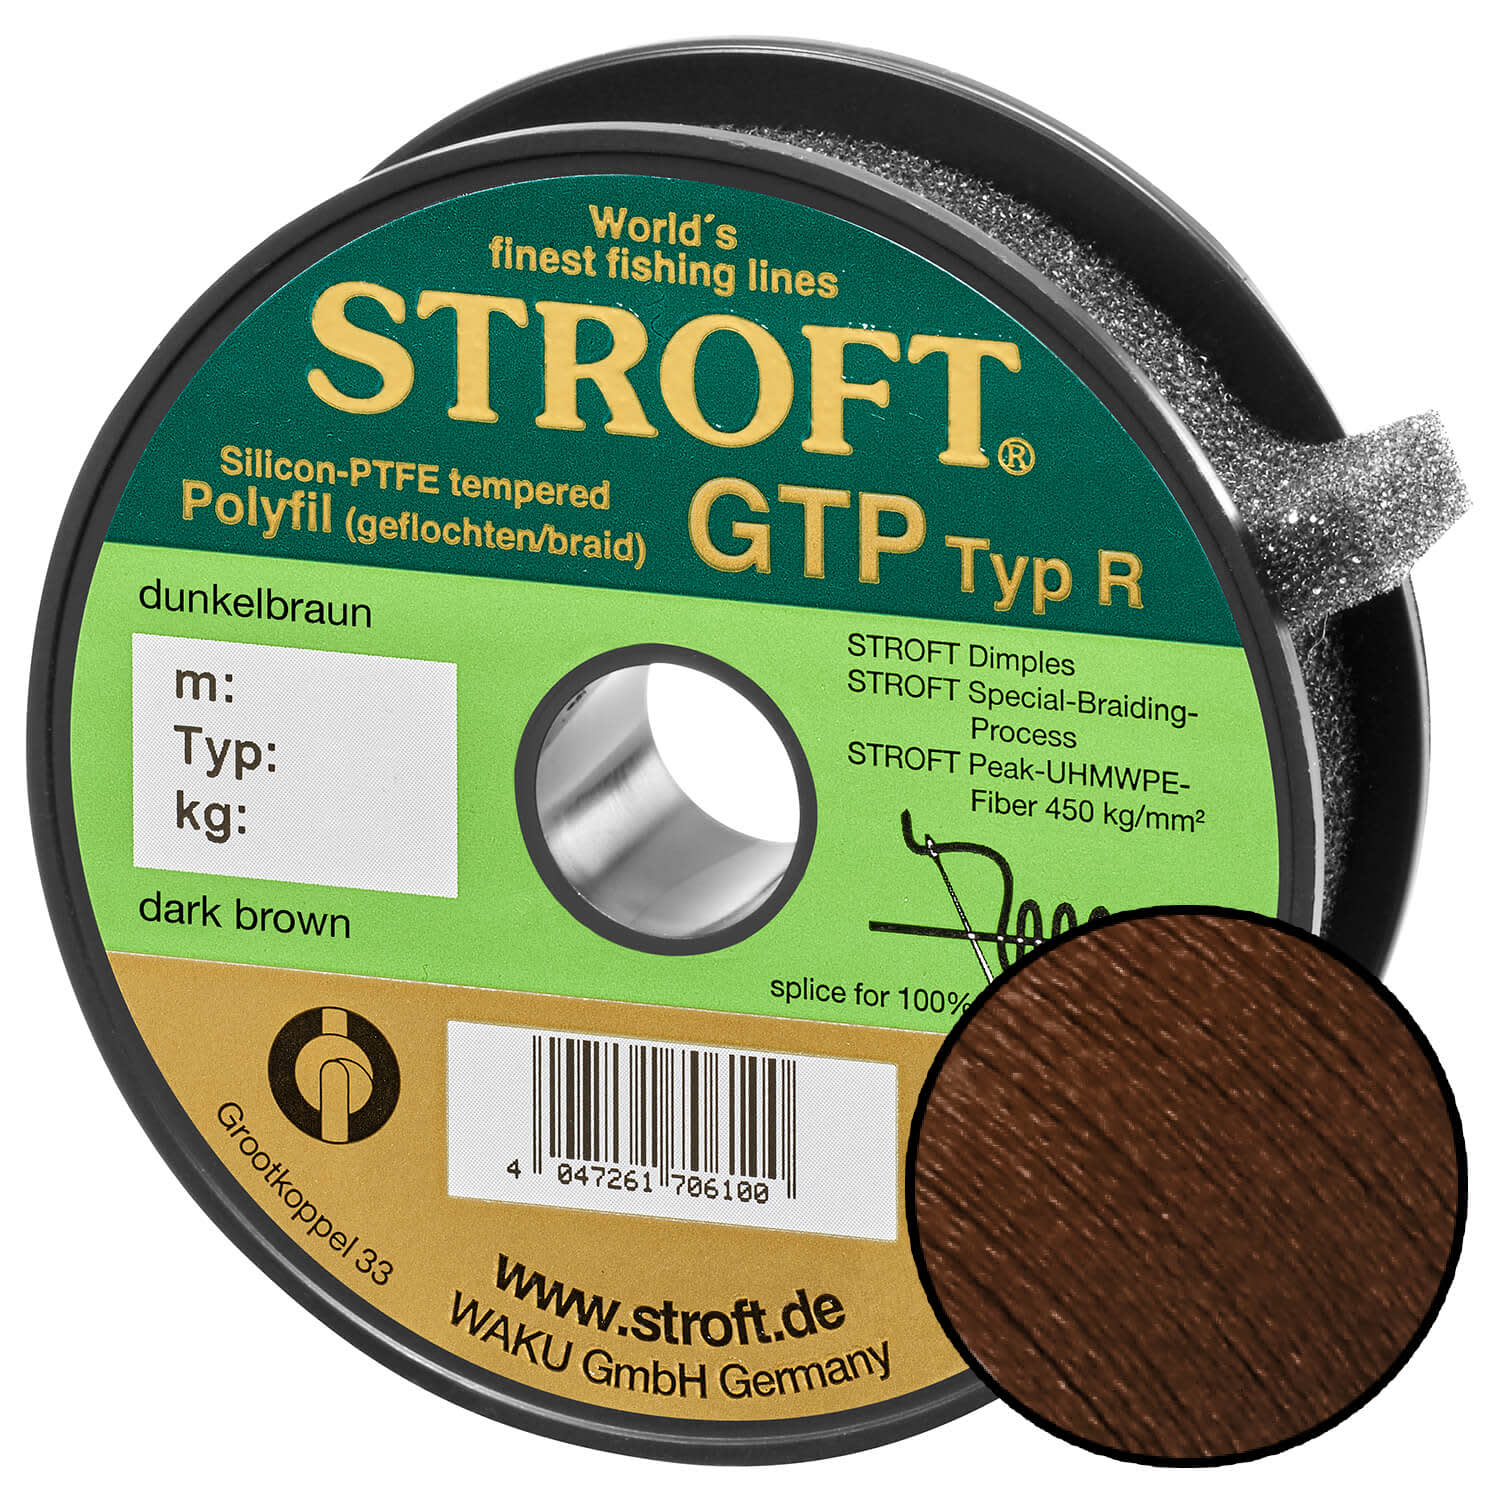 STROFT GTP Type R Braided Fishing Line 200m darkbrown buy by